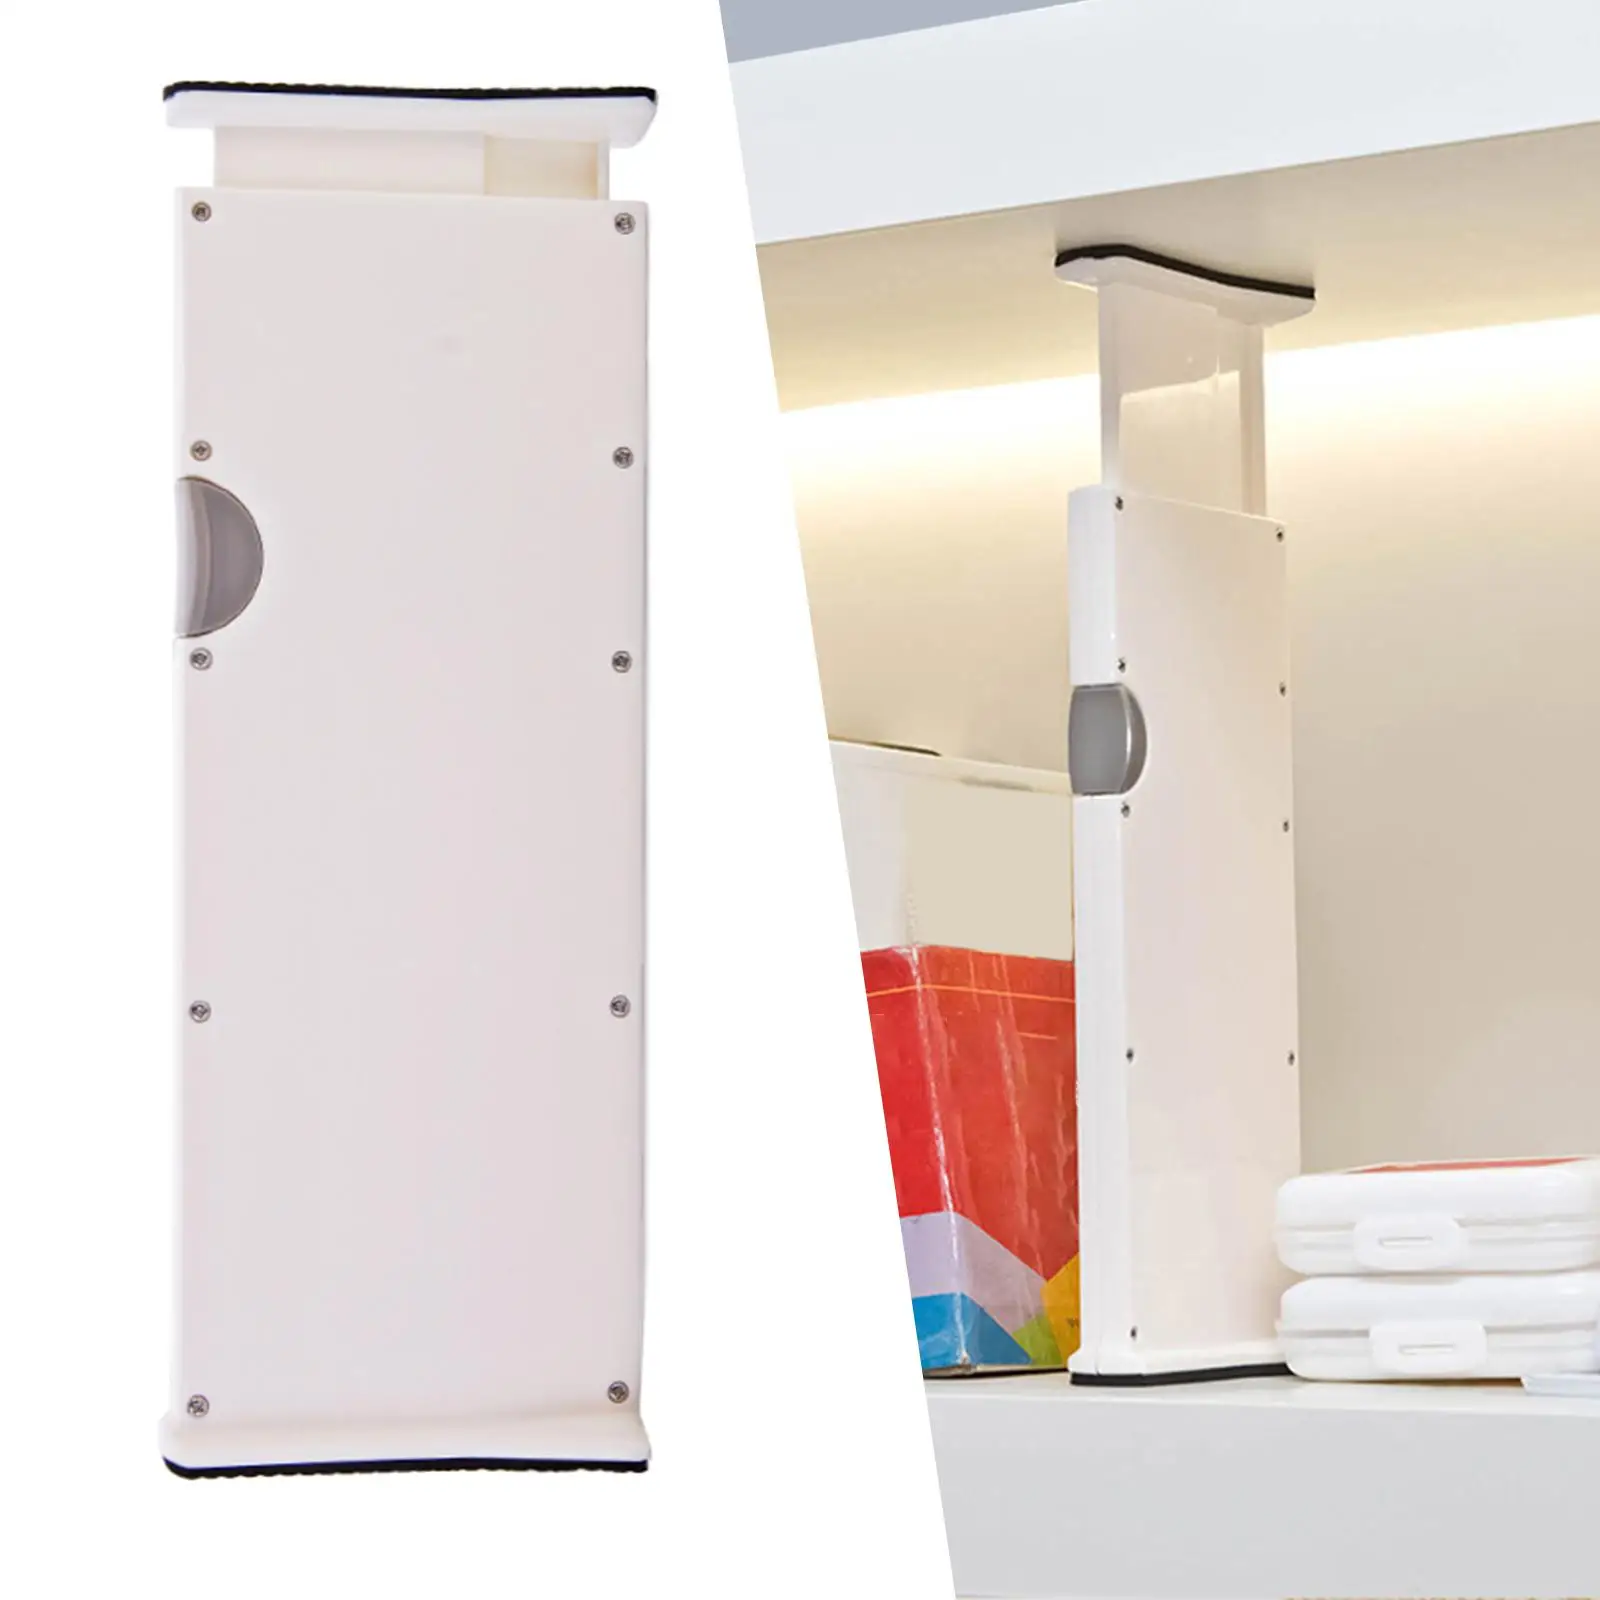 Storage Drawers Divider Retractable Adjustable Separators ABS Plastic Dresser Organizer for Bedroom Cabinet Clothing Socks Home